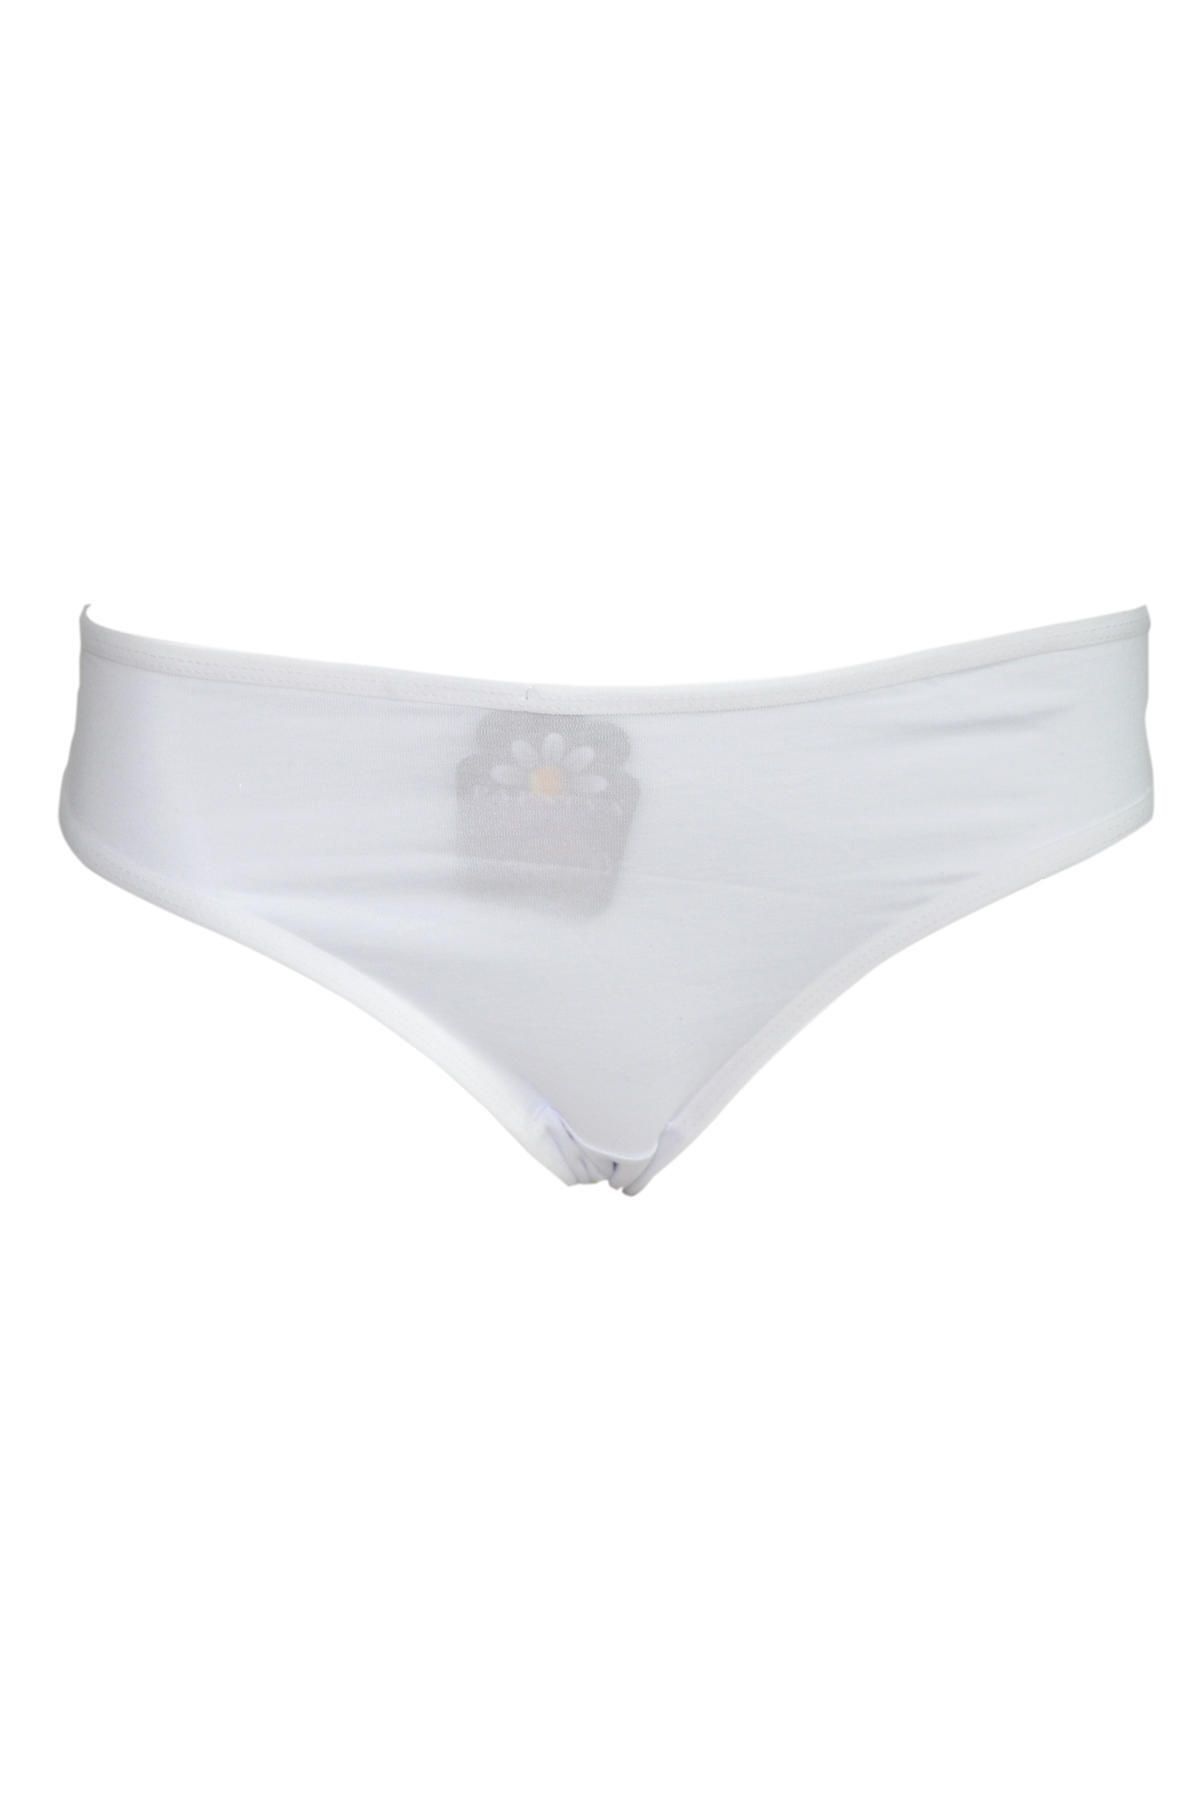 Kompedan Bikini Altı Pamuk Beyaz Külot | Papatya 200